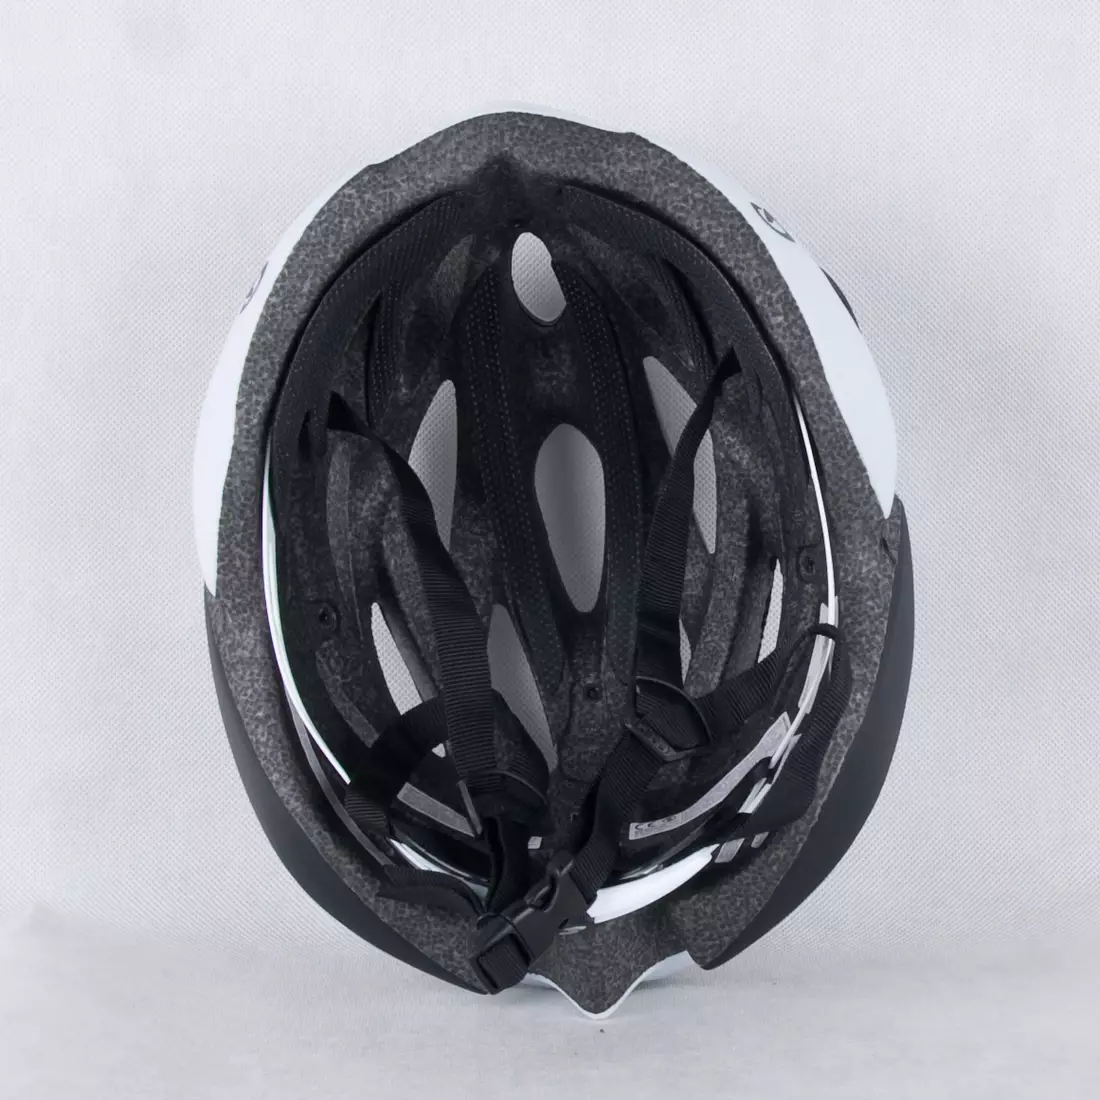 GIRO SAVANT - bílá a černá matná cyklistická přilba